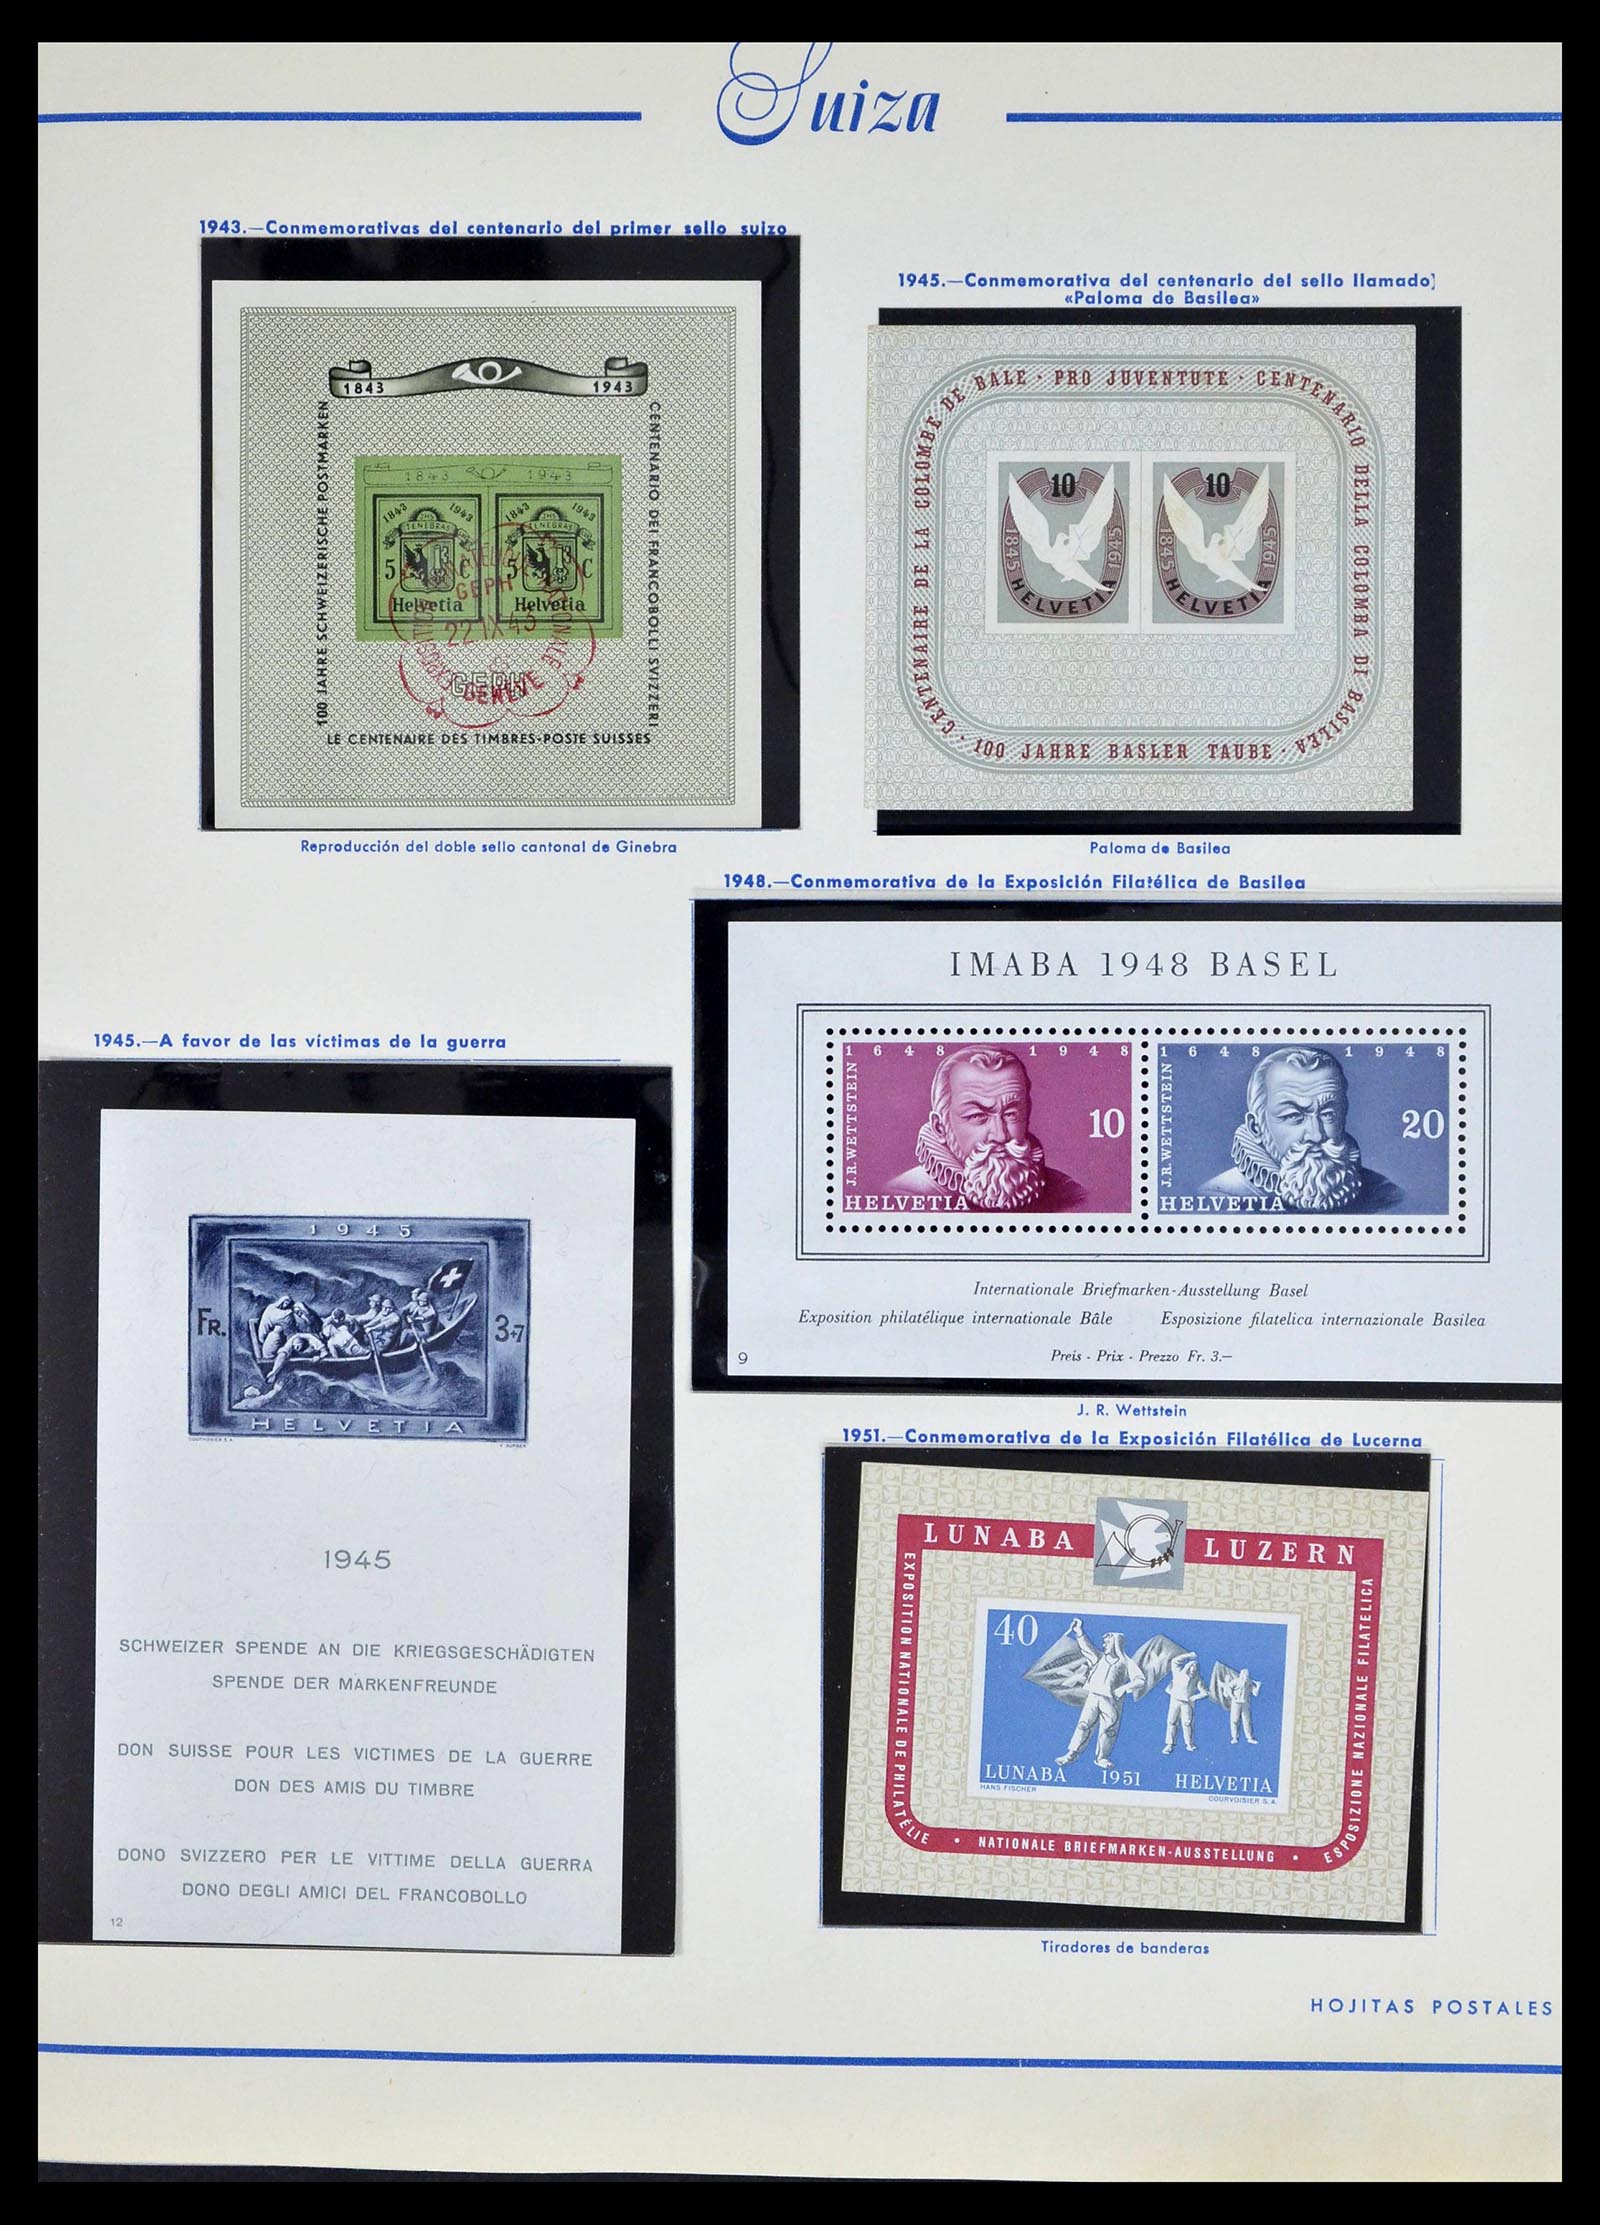 39217 0093 - Stamp collection 39217 Switzerland 1850-1986.